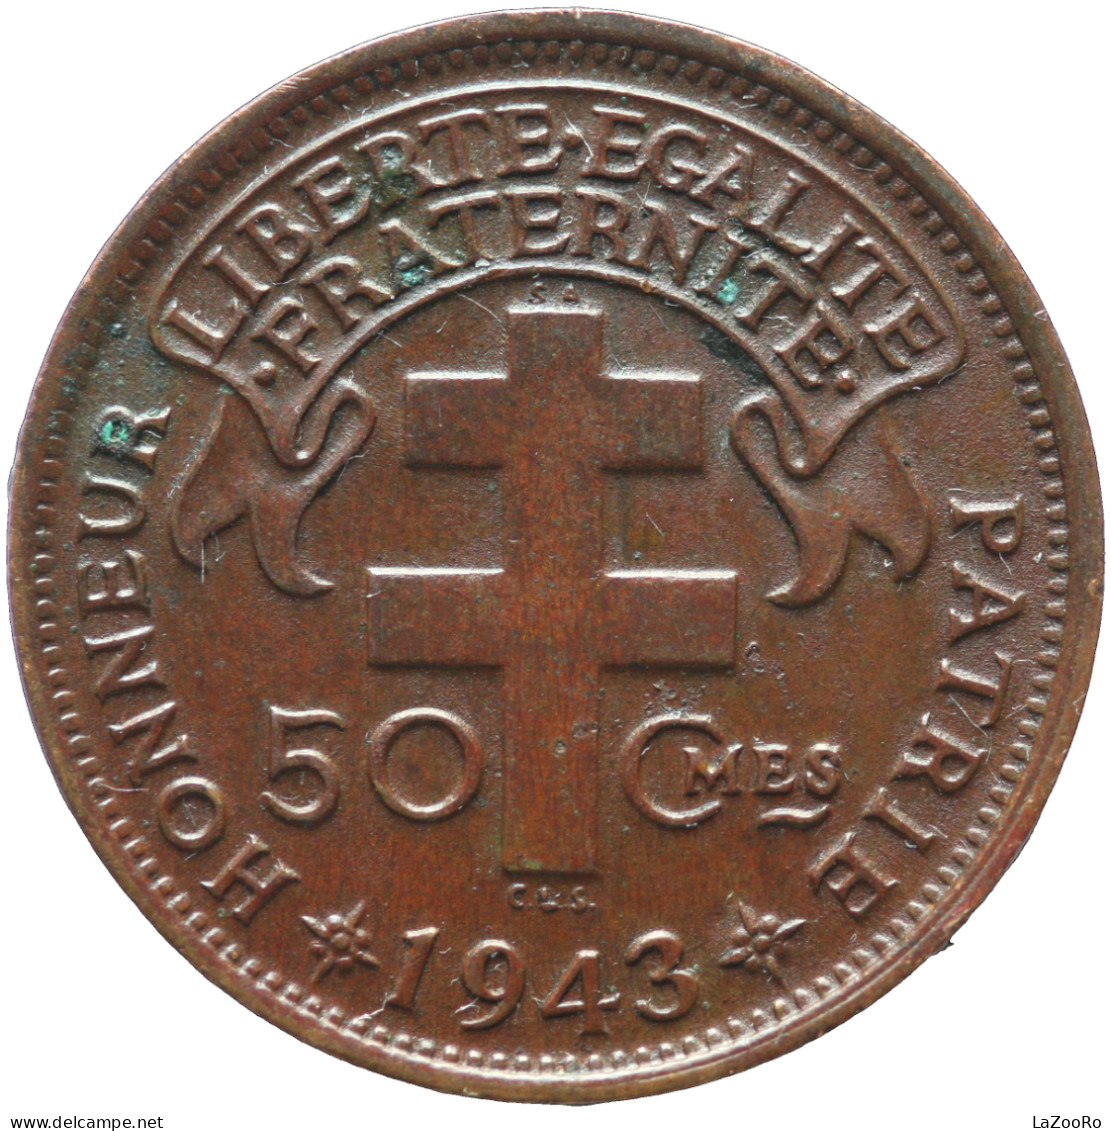 LaZooRo: French Equatorial Africa 50 Centimes 1943 SA UNC - Afrique Equatoriale Française (Cameroun)